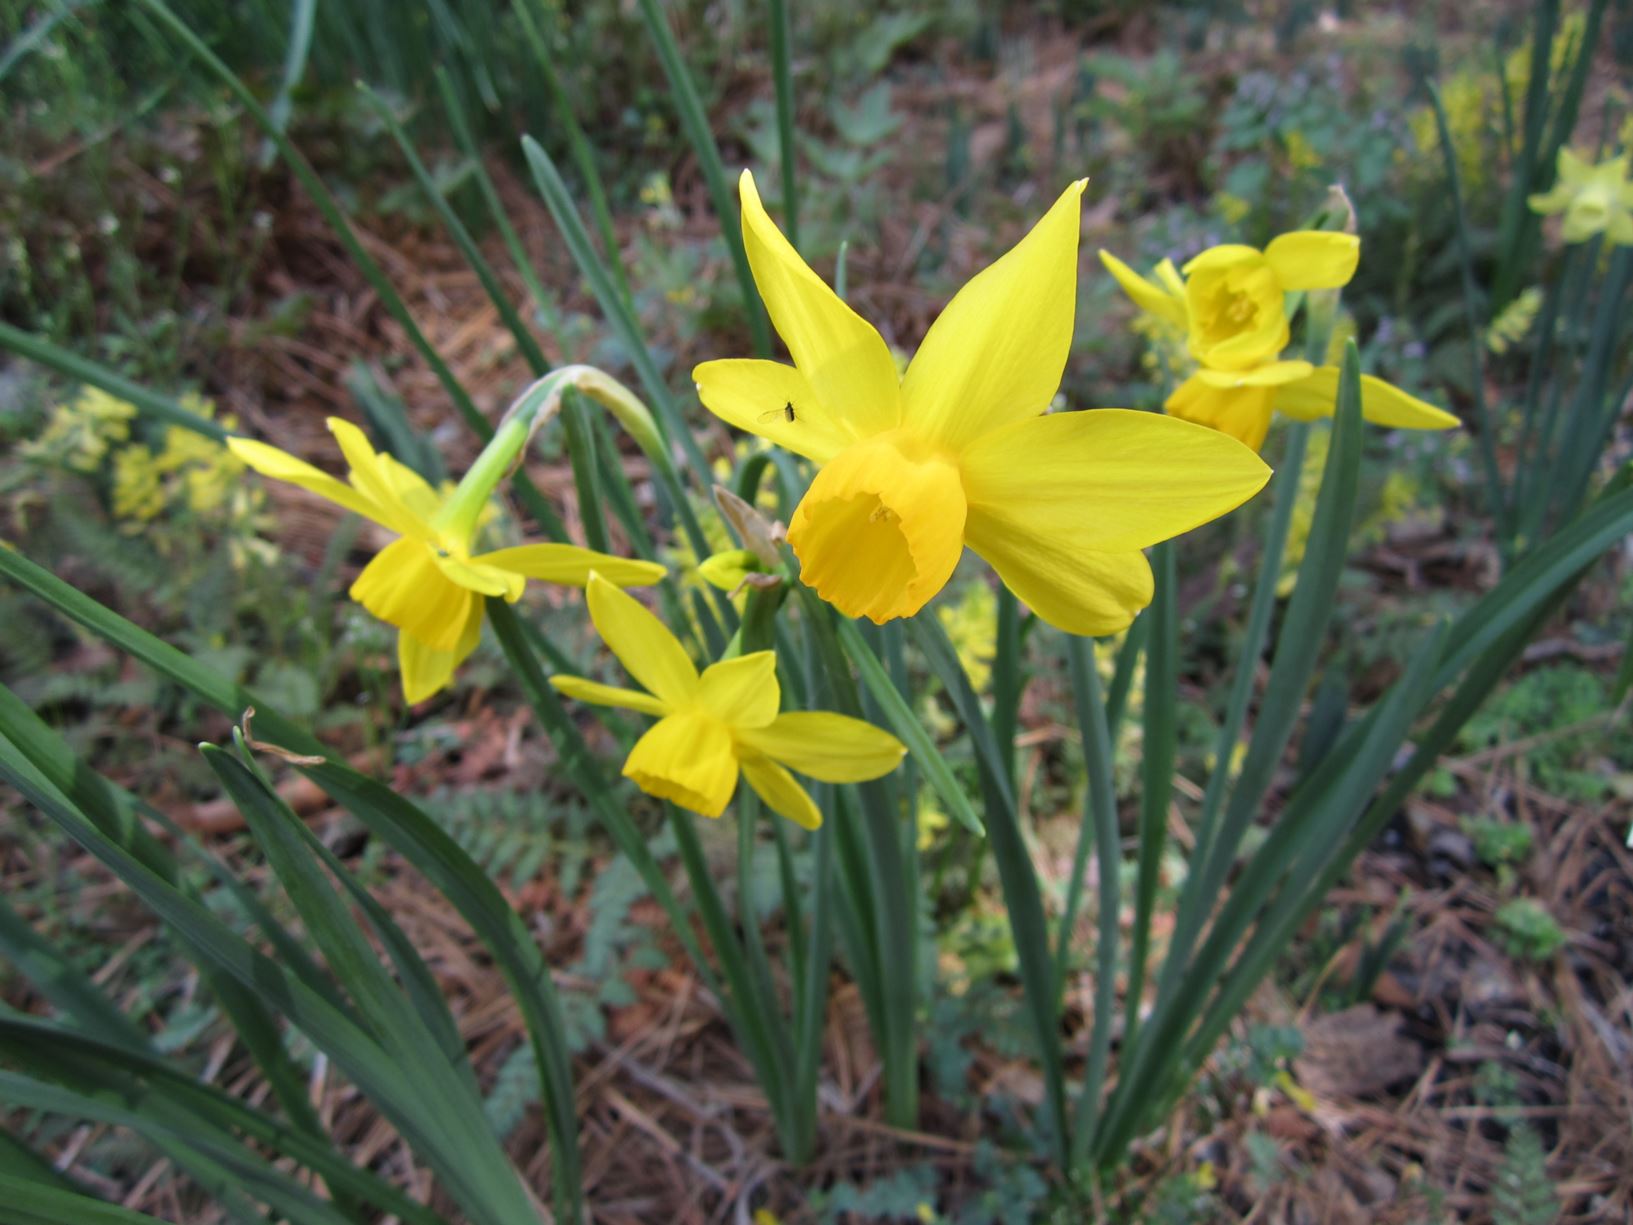 Narcissus 'Pipit' - jonquilla daffodil